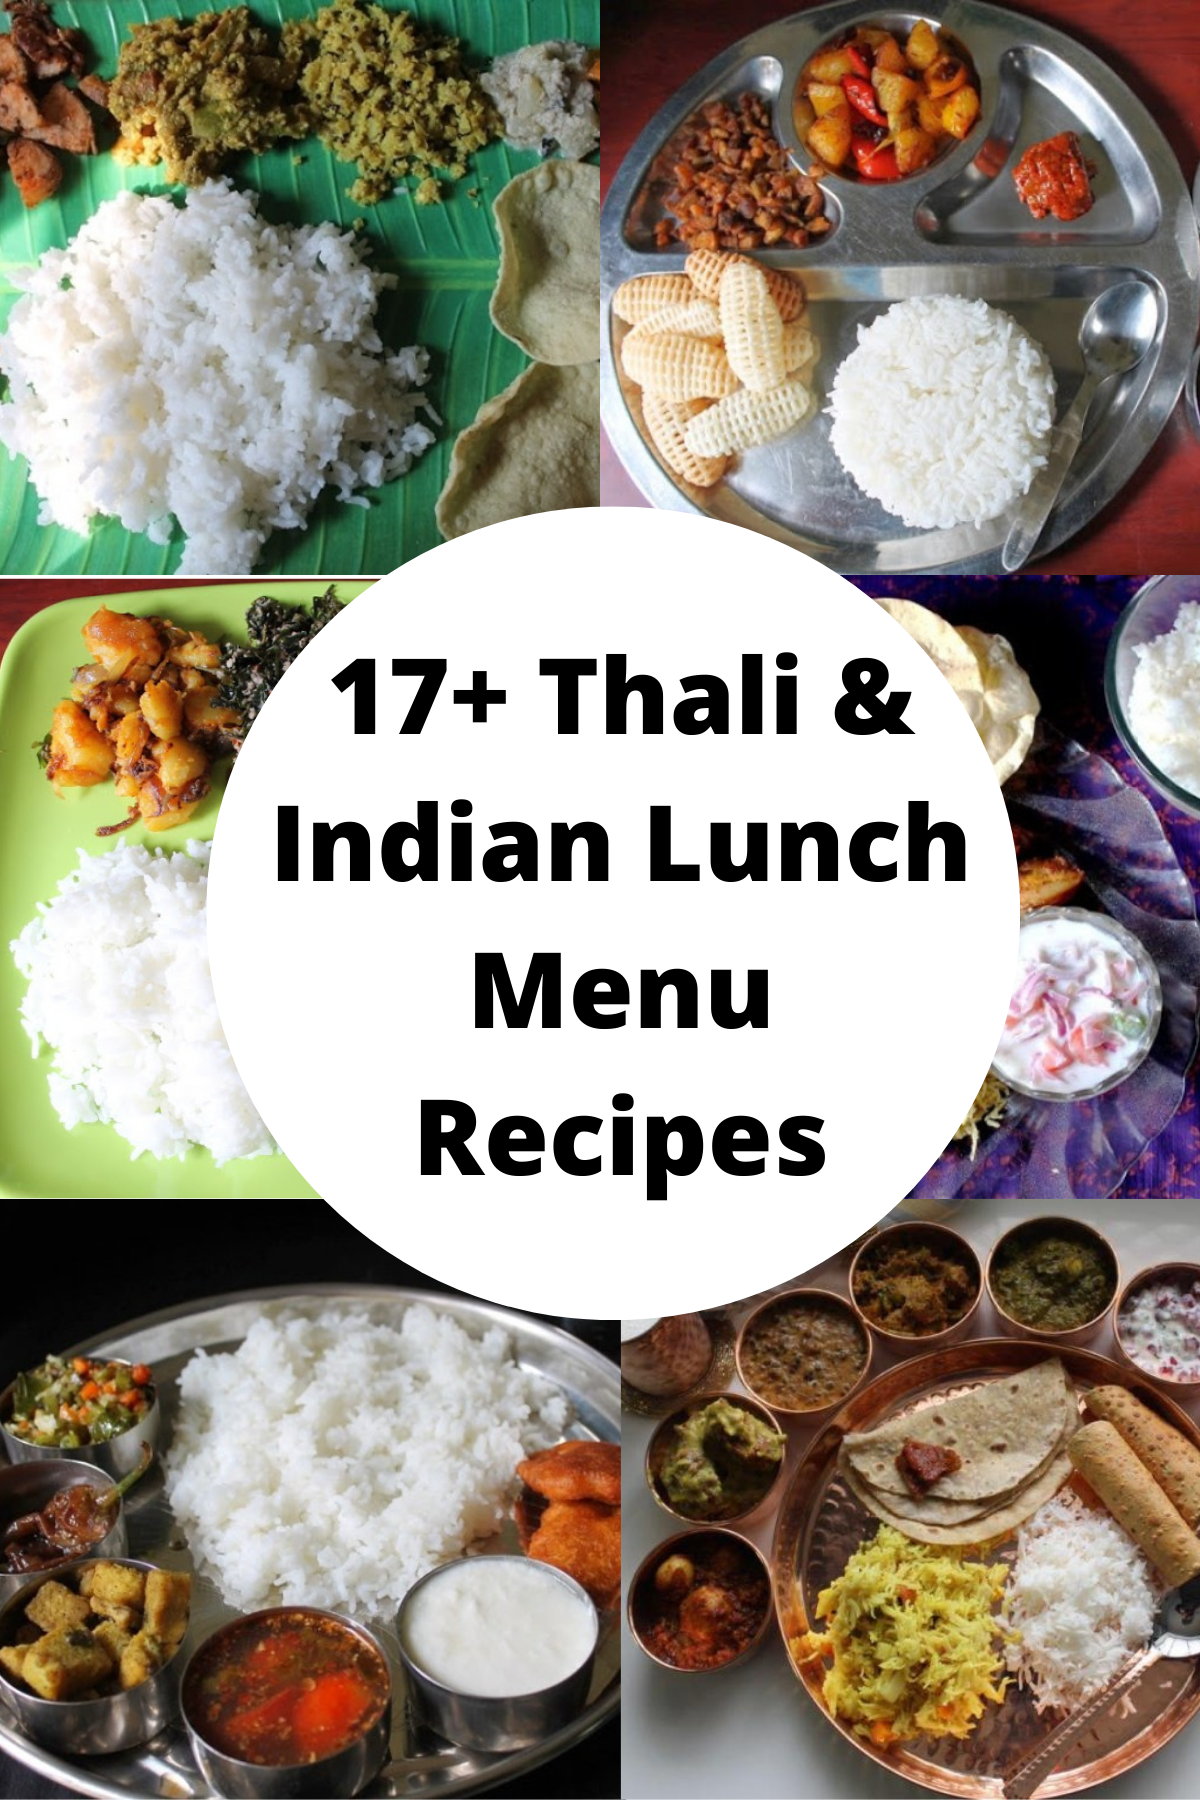 Indian lunch menu ideas - Raks Kitchen